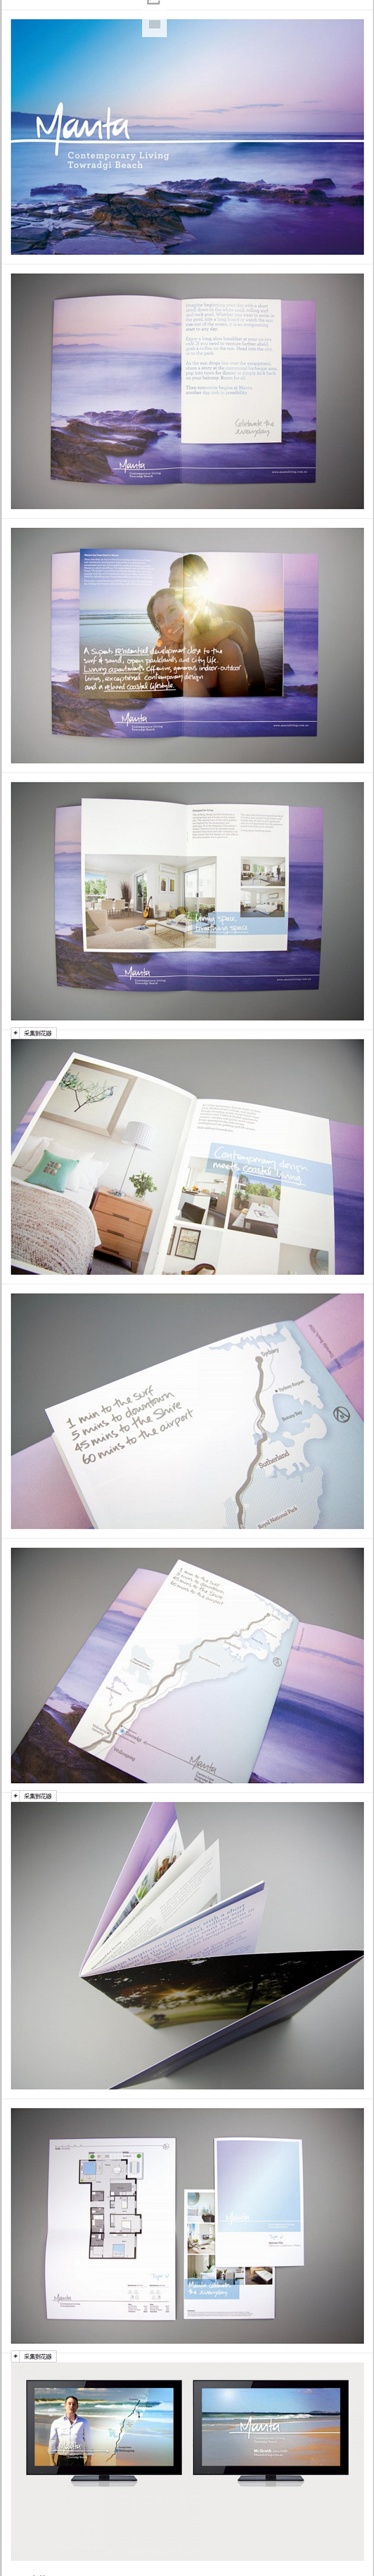 Manta房地产画册设计 设计圈 展示 ...